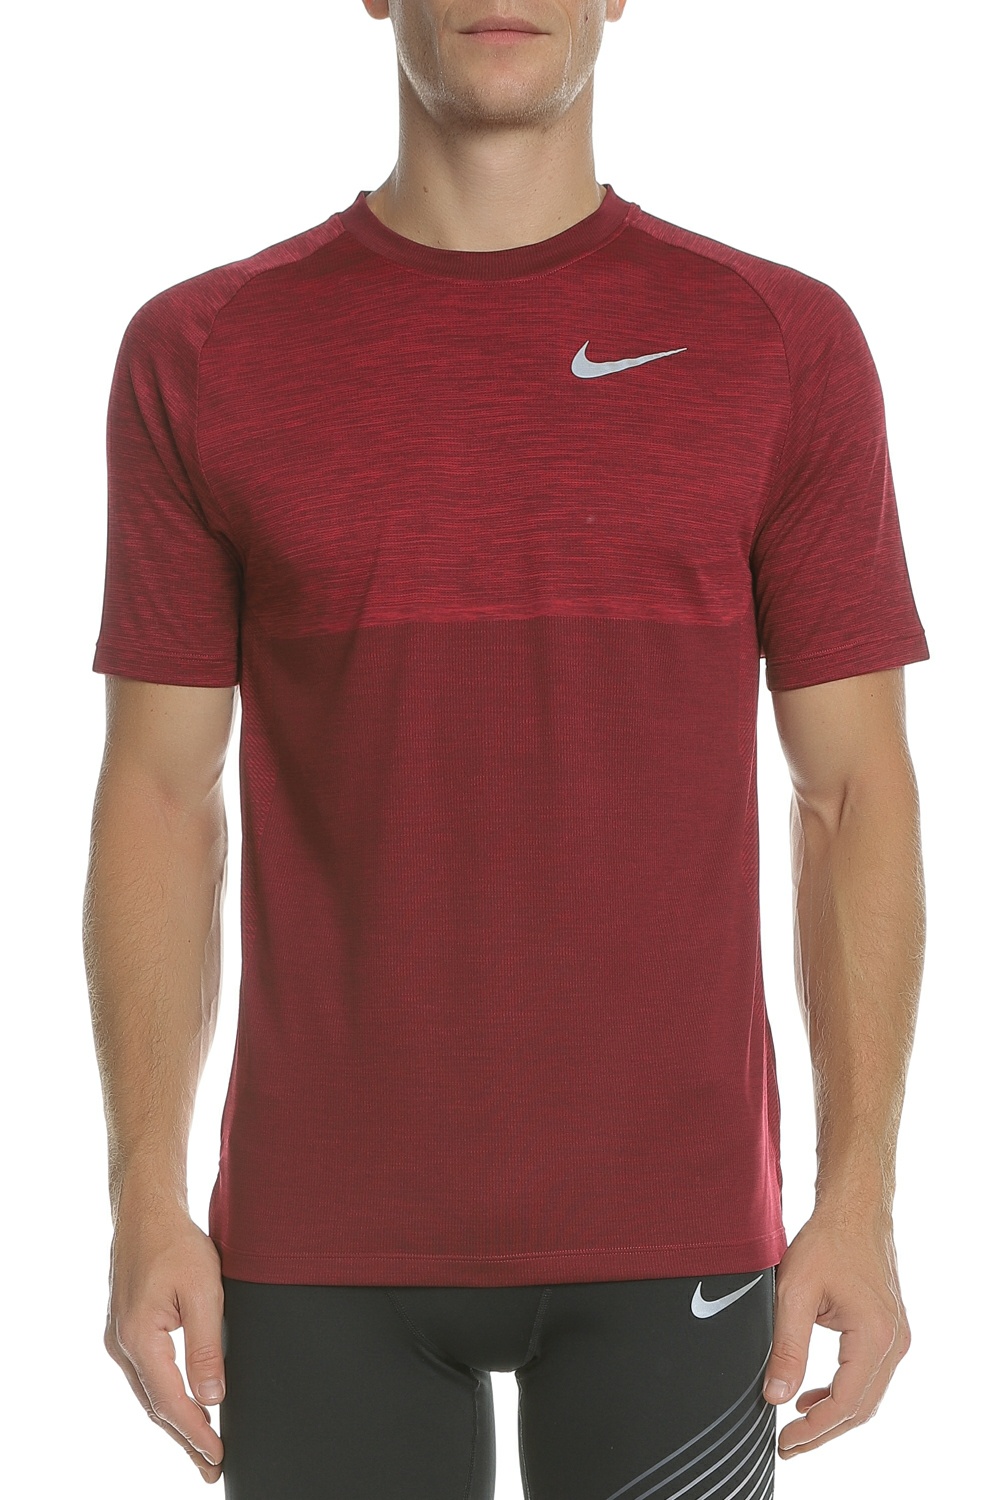 NIKE - Ανδρική κοντομάνικη μπλούζα Nike DRY MEDALIST TOP SS κόκκινη Ανδρικά/Ρούχα/Αθλητικά/T-shirt